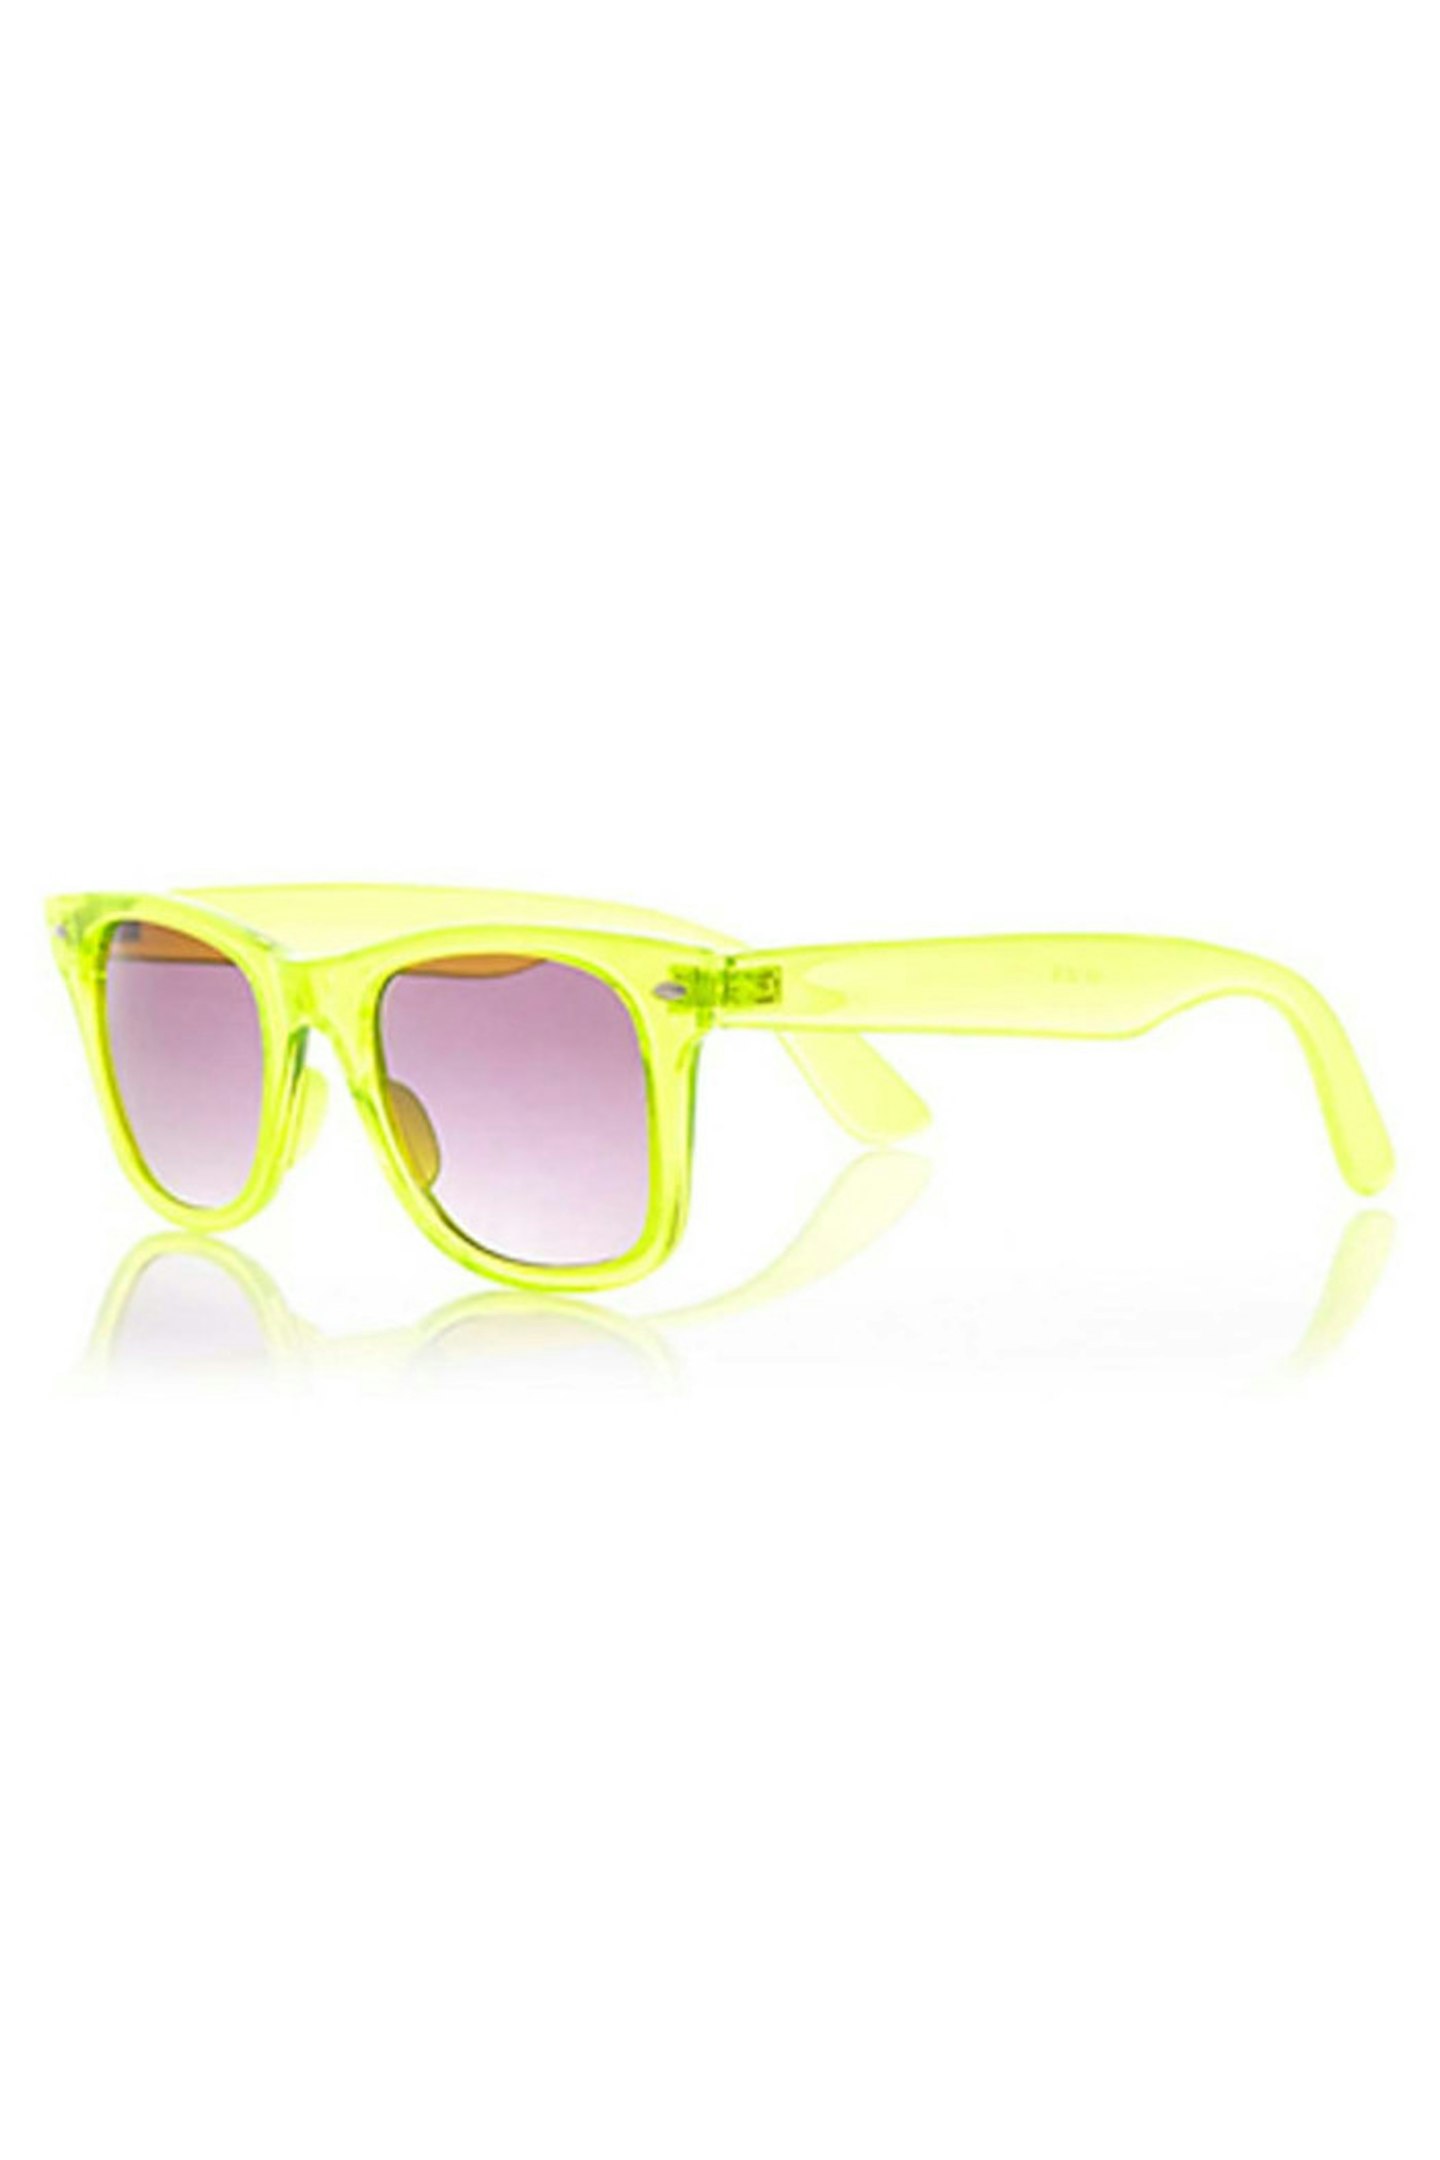 Sunglasses, £10, River Island